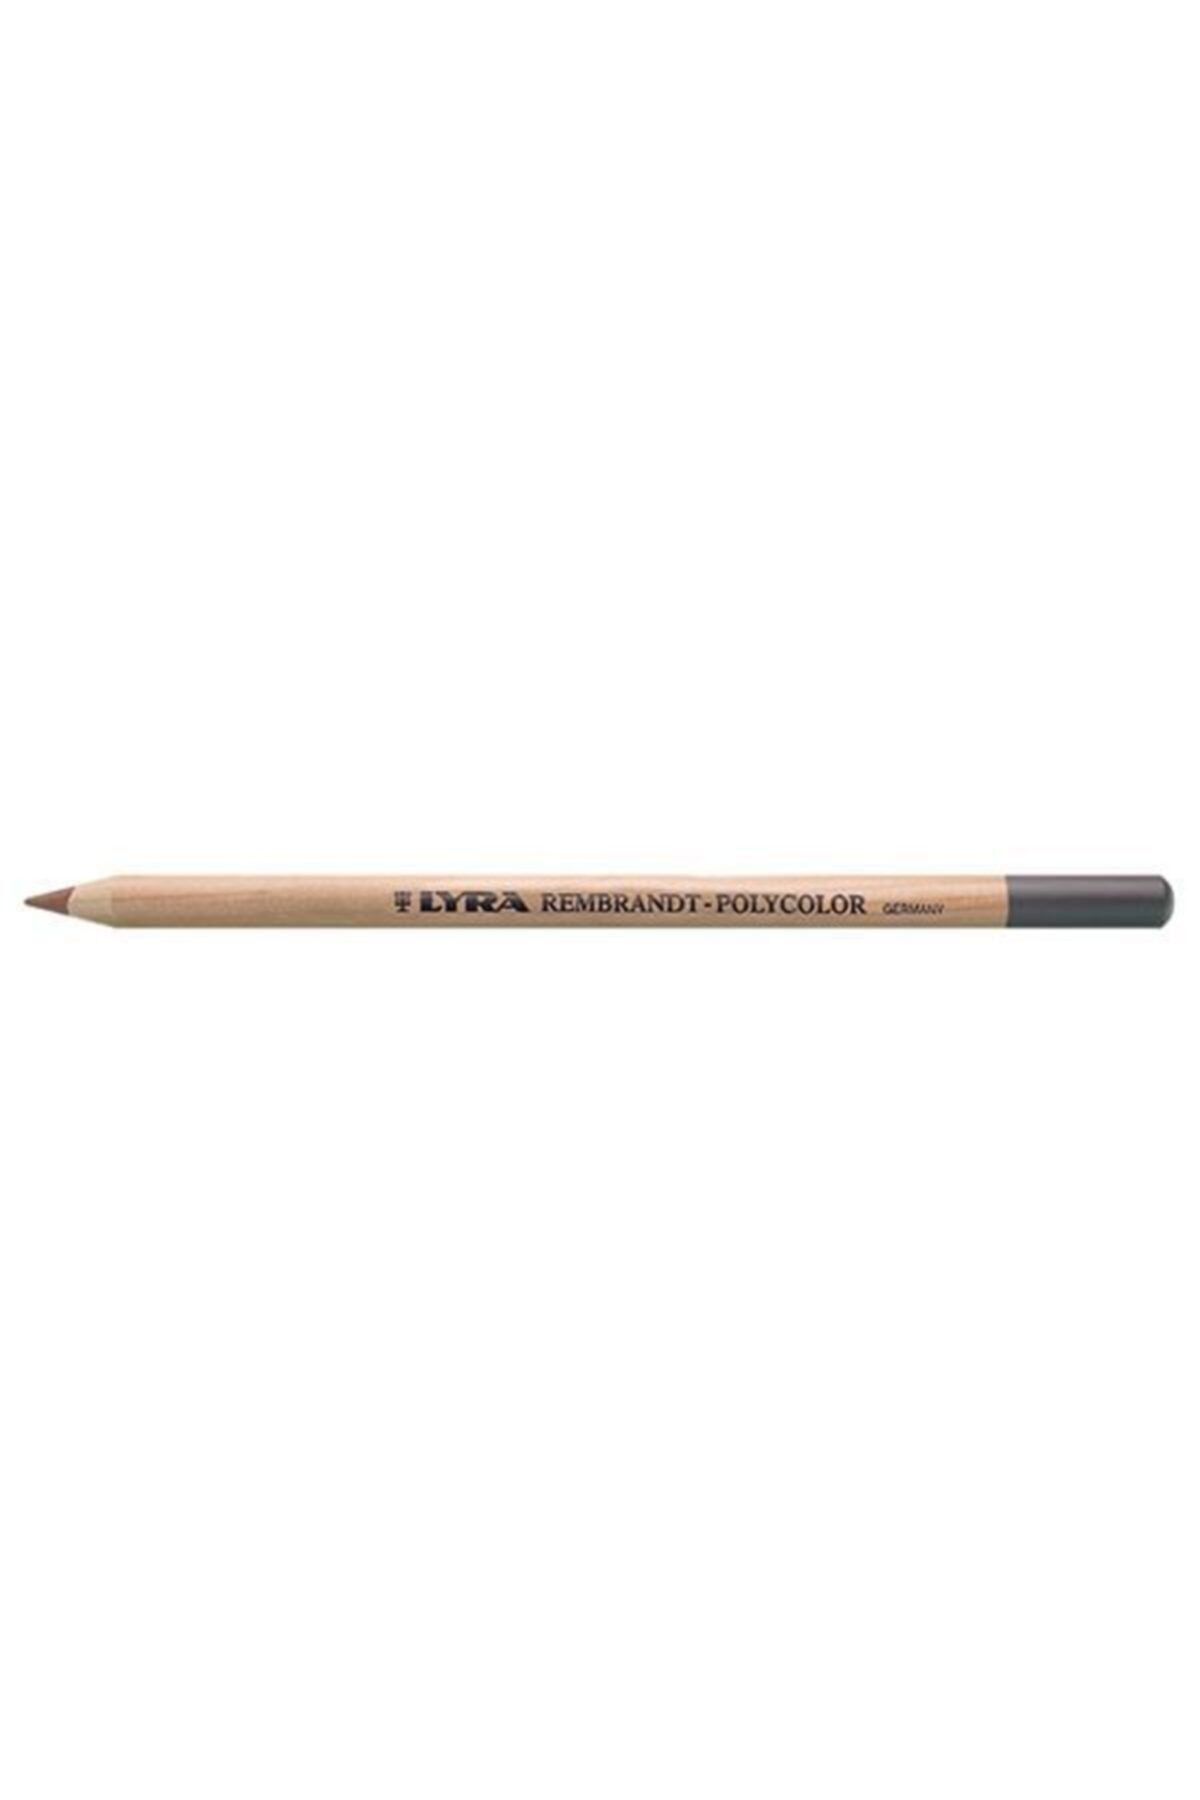 Lyra مداد رنگی رامبراند پلی کالر DARK SEPIA L2000075